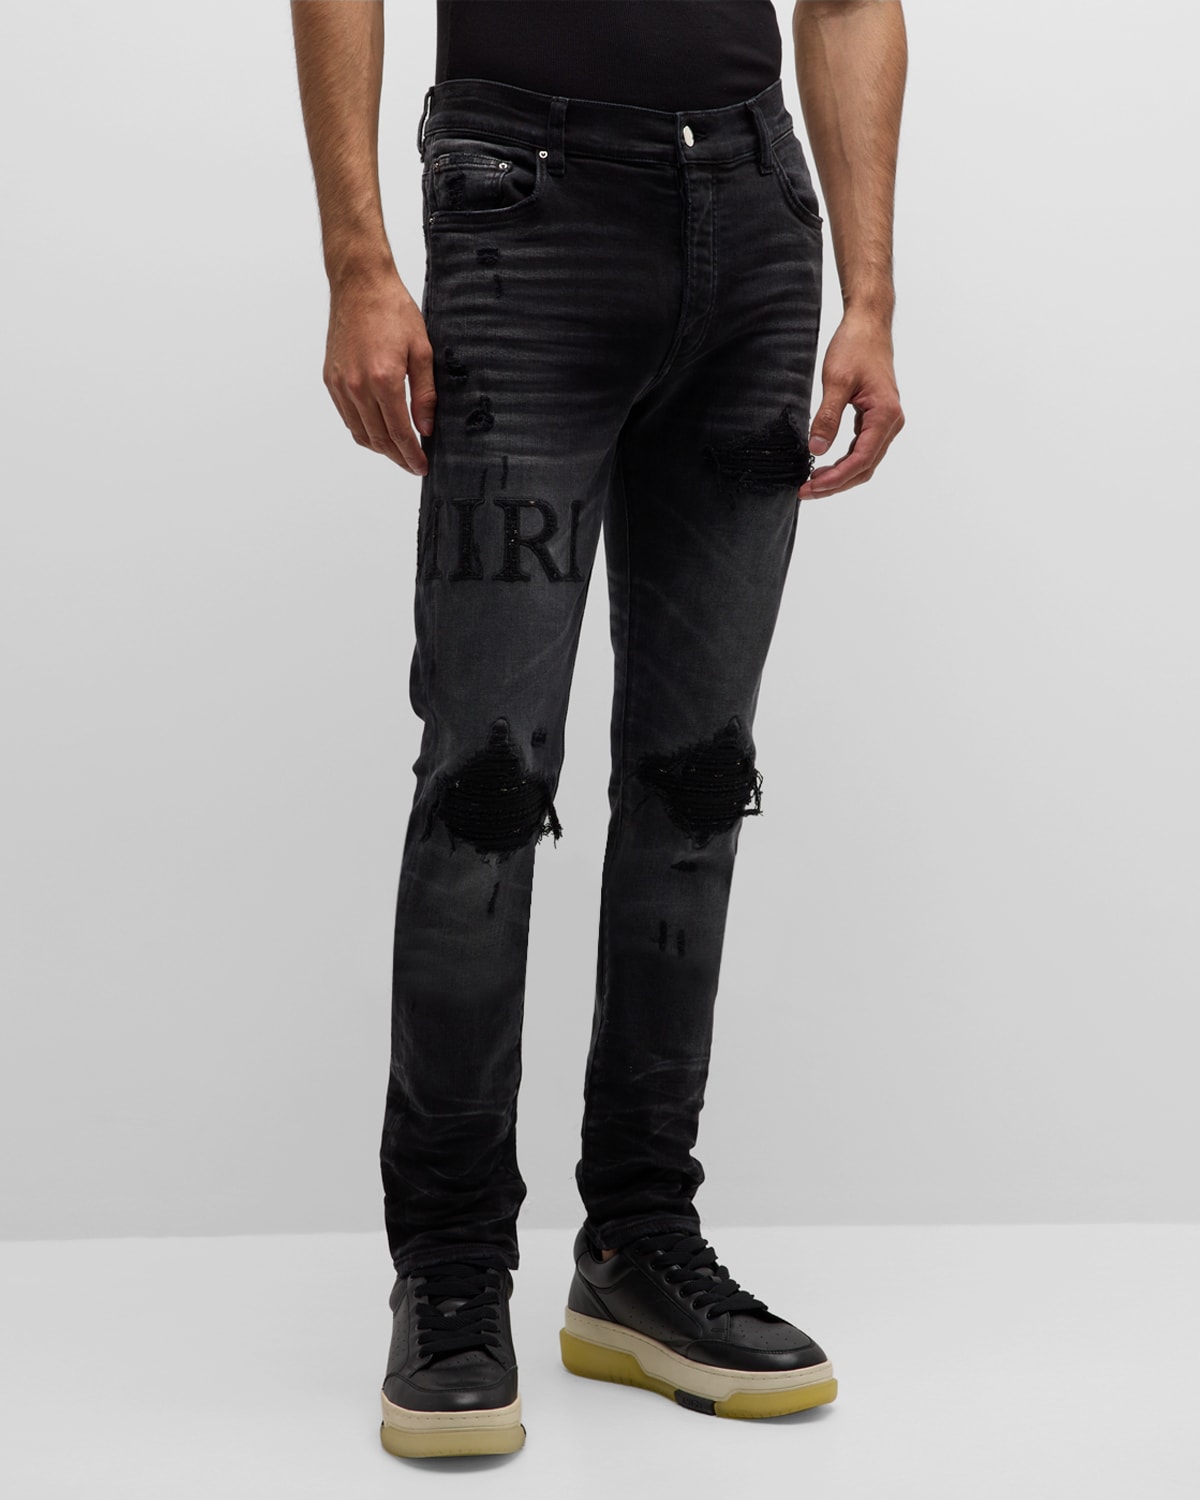 Men's MX1 Applique Slim Distressed Jeans